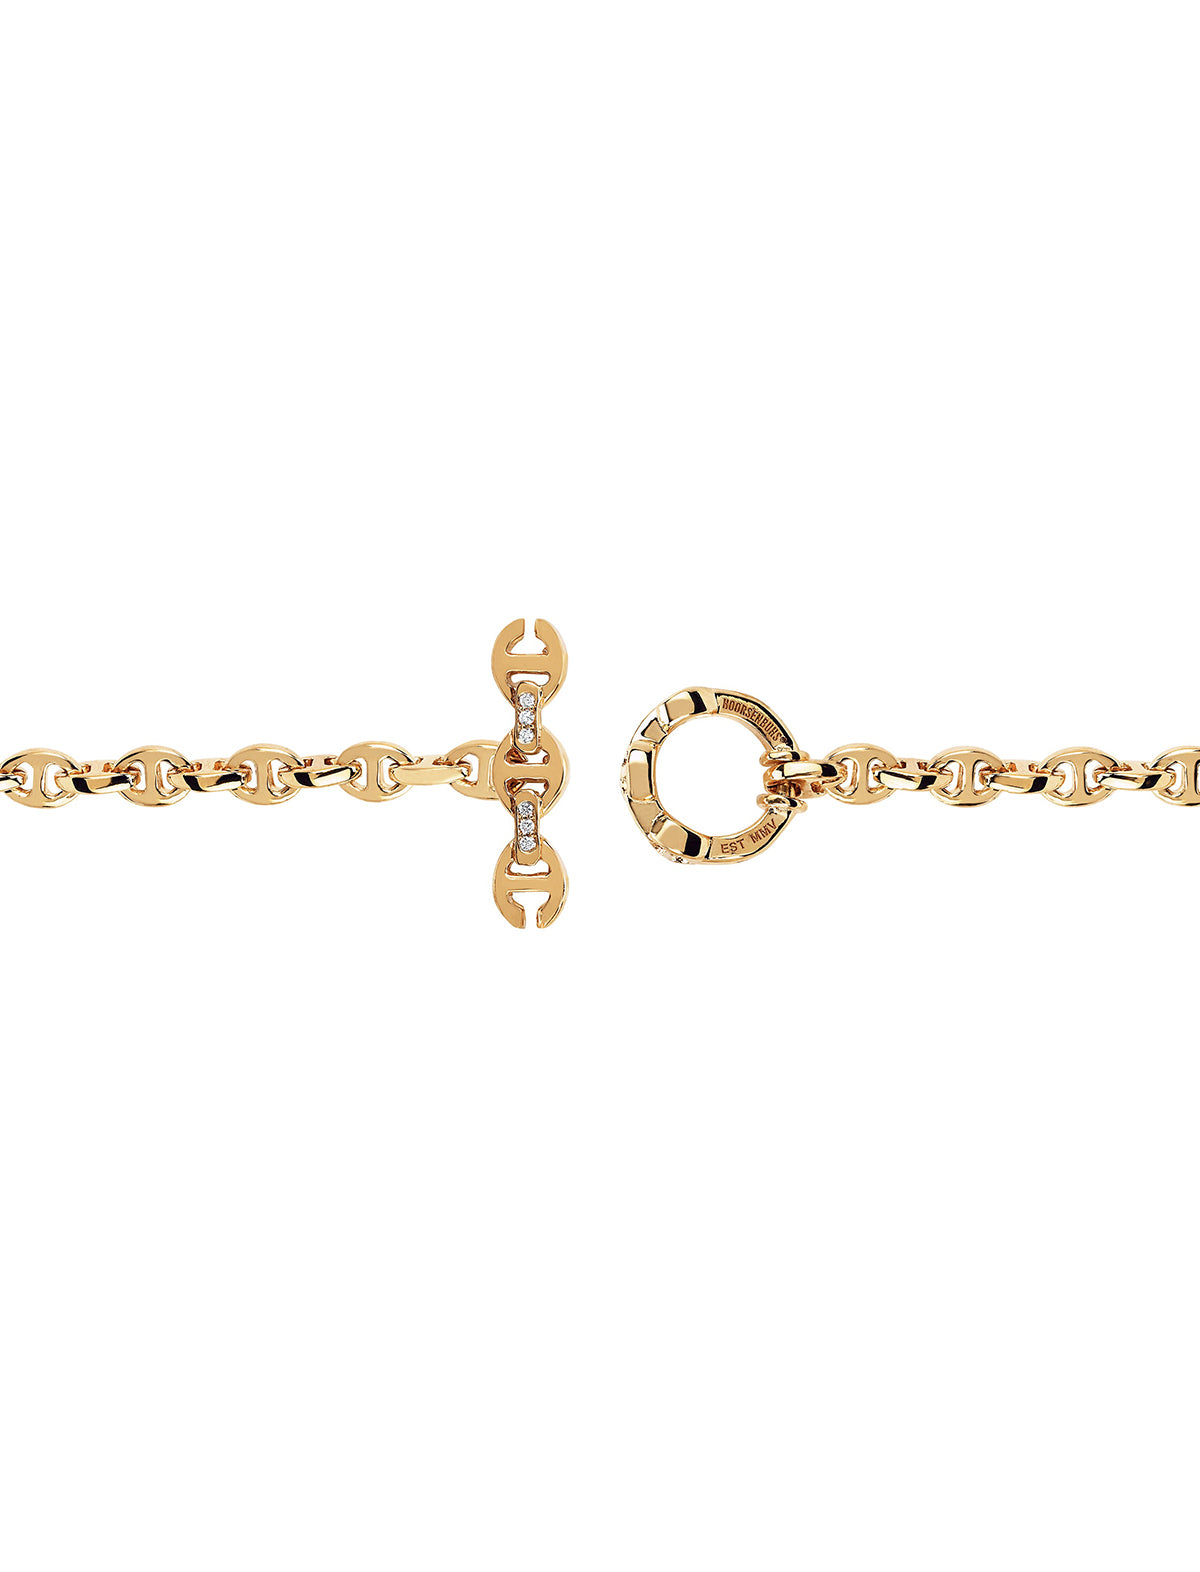 HOORSENBUHS 3mm Open-Link™ Necklace 18k Yellow Gold